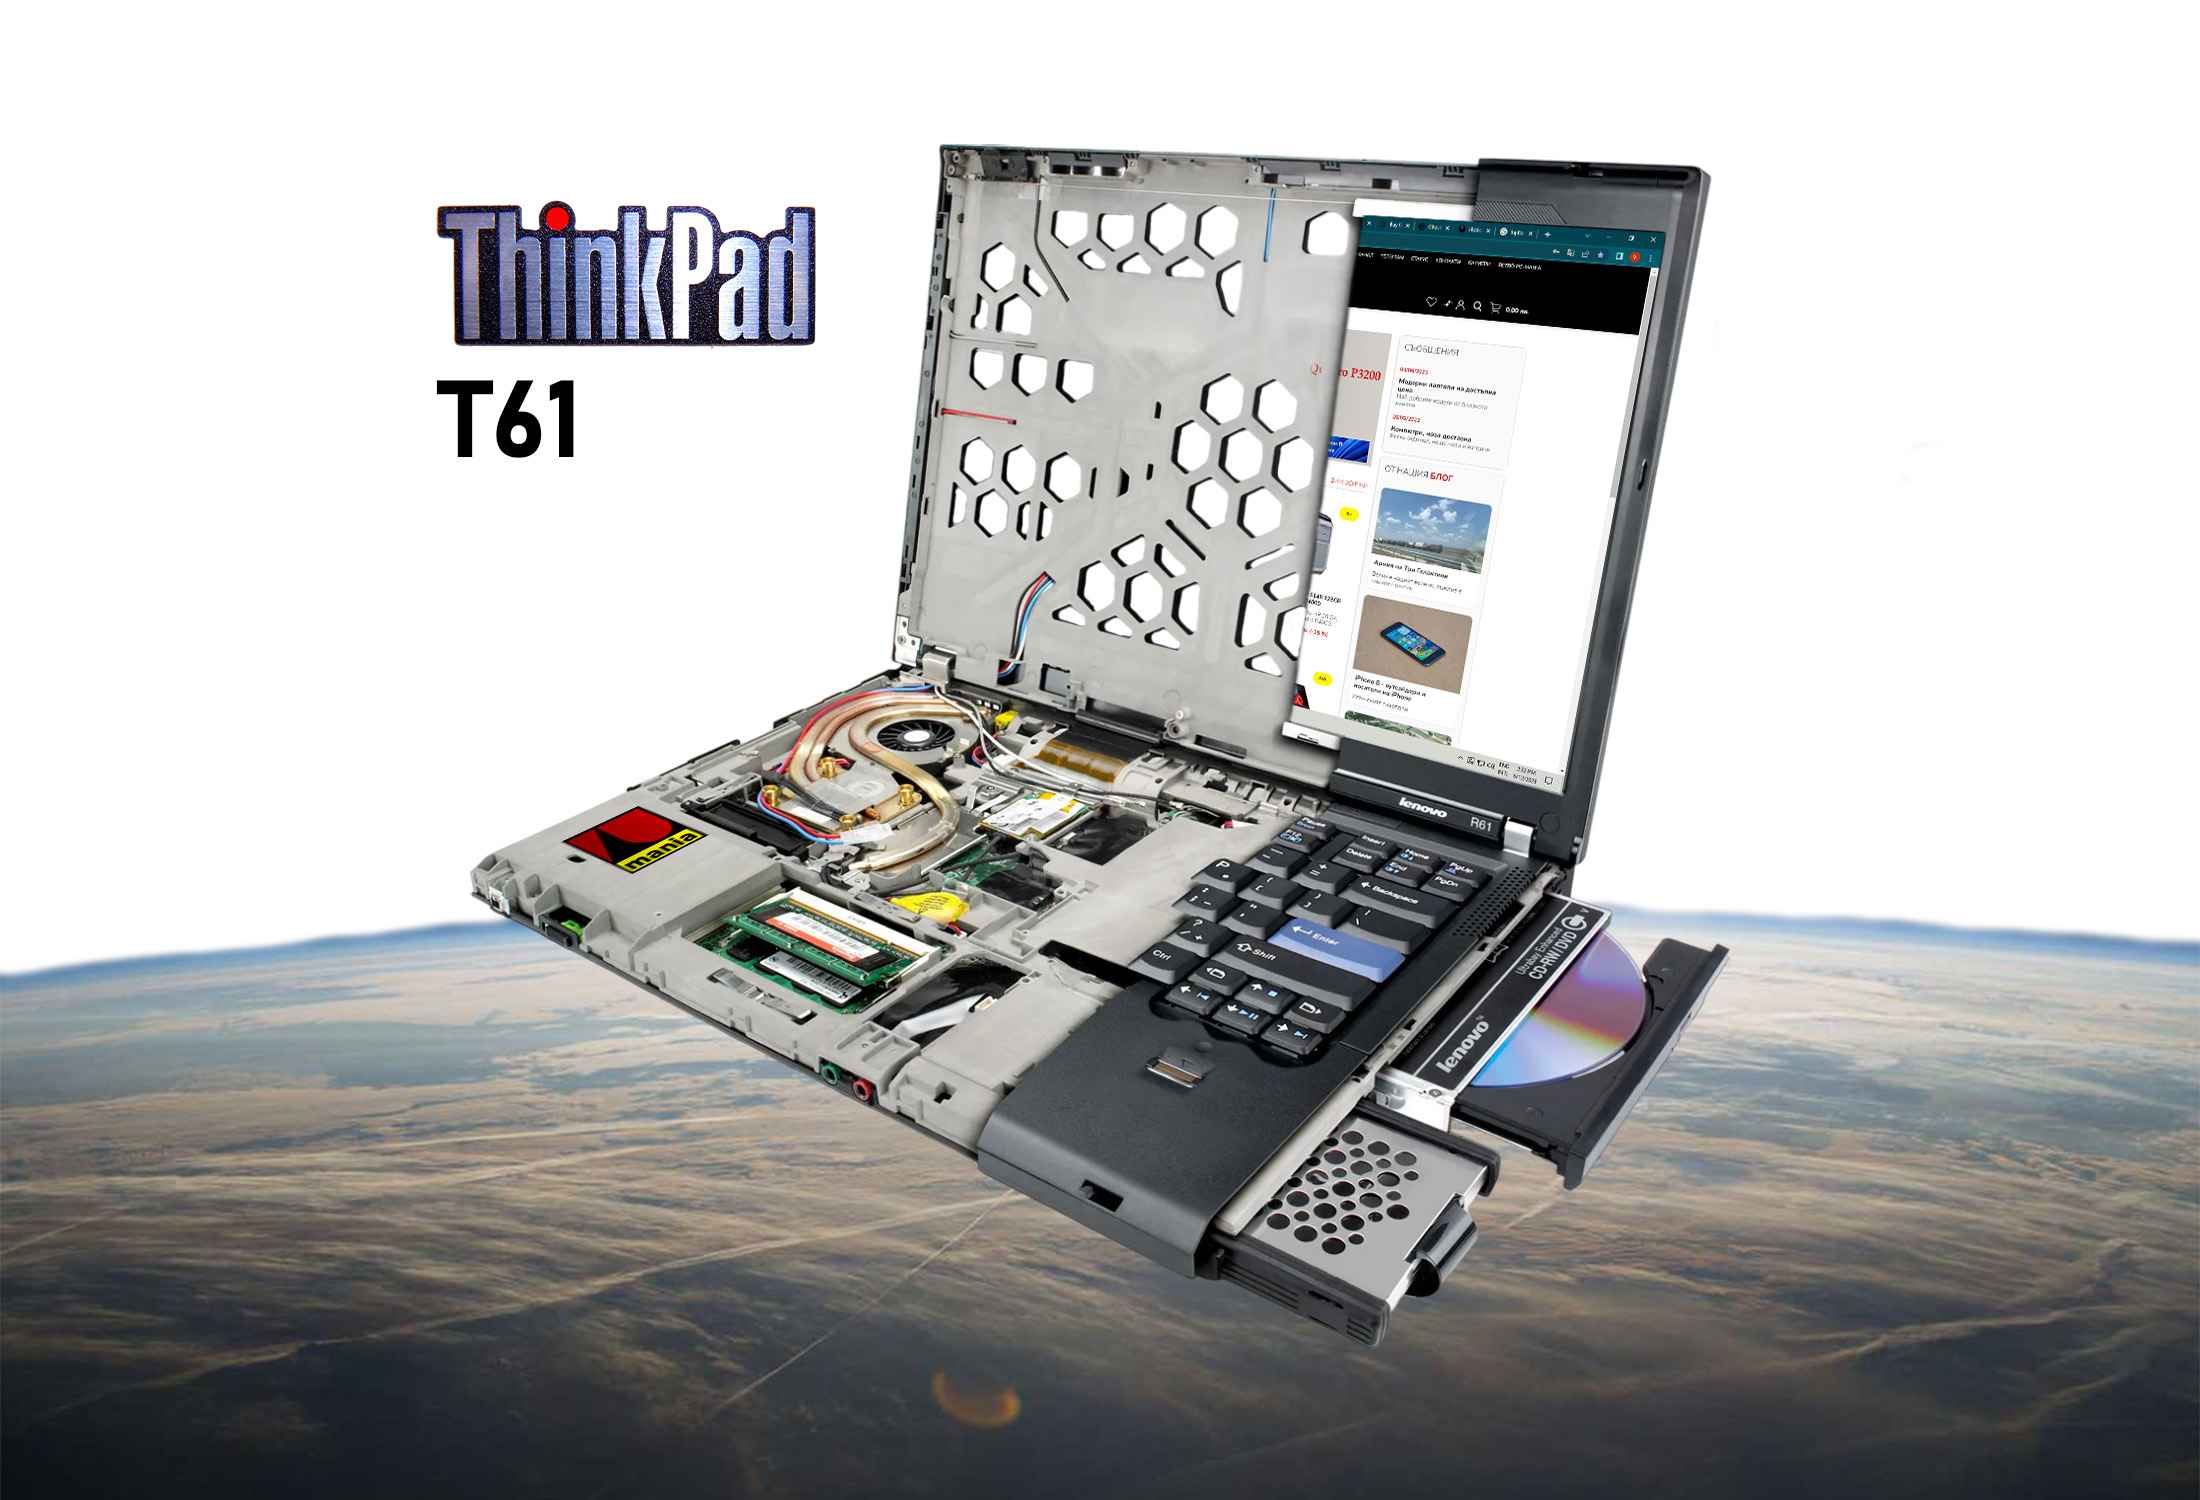 Lenovo Thinkpad T61 C2D T9300 8GB RAM NVS 140M 1680x1050